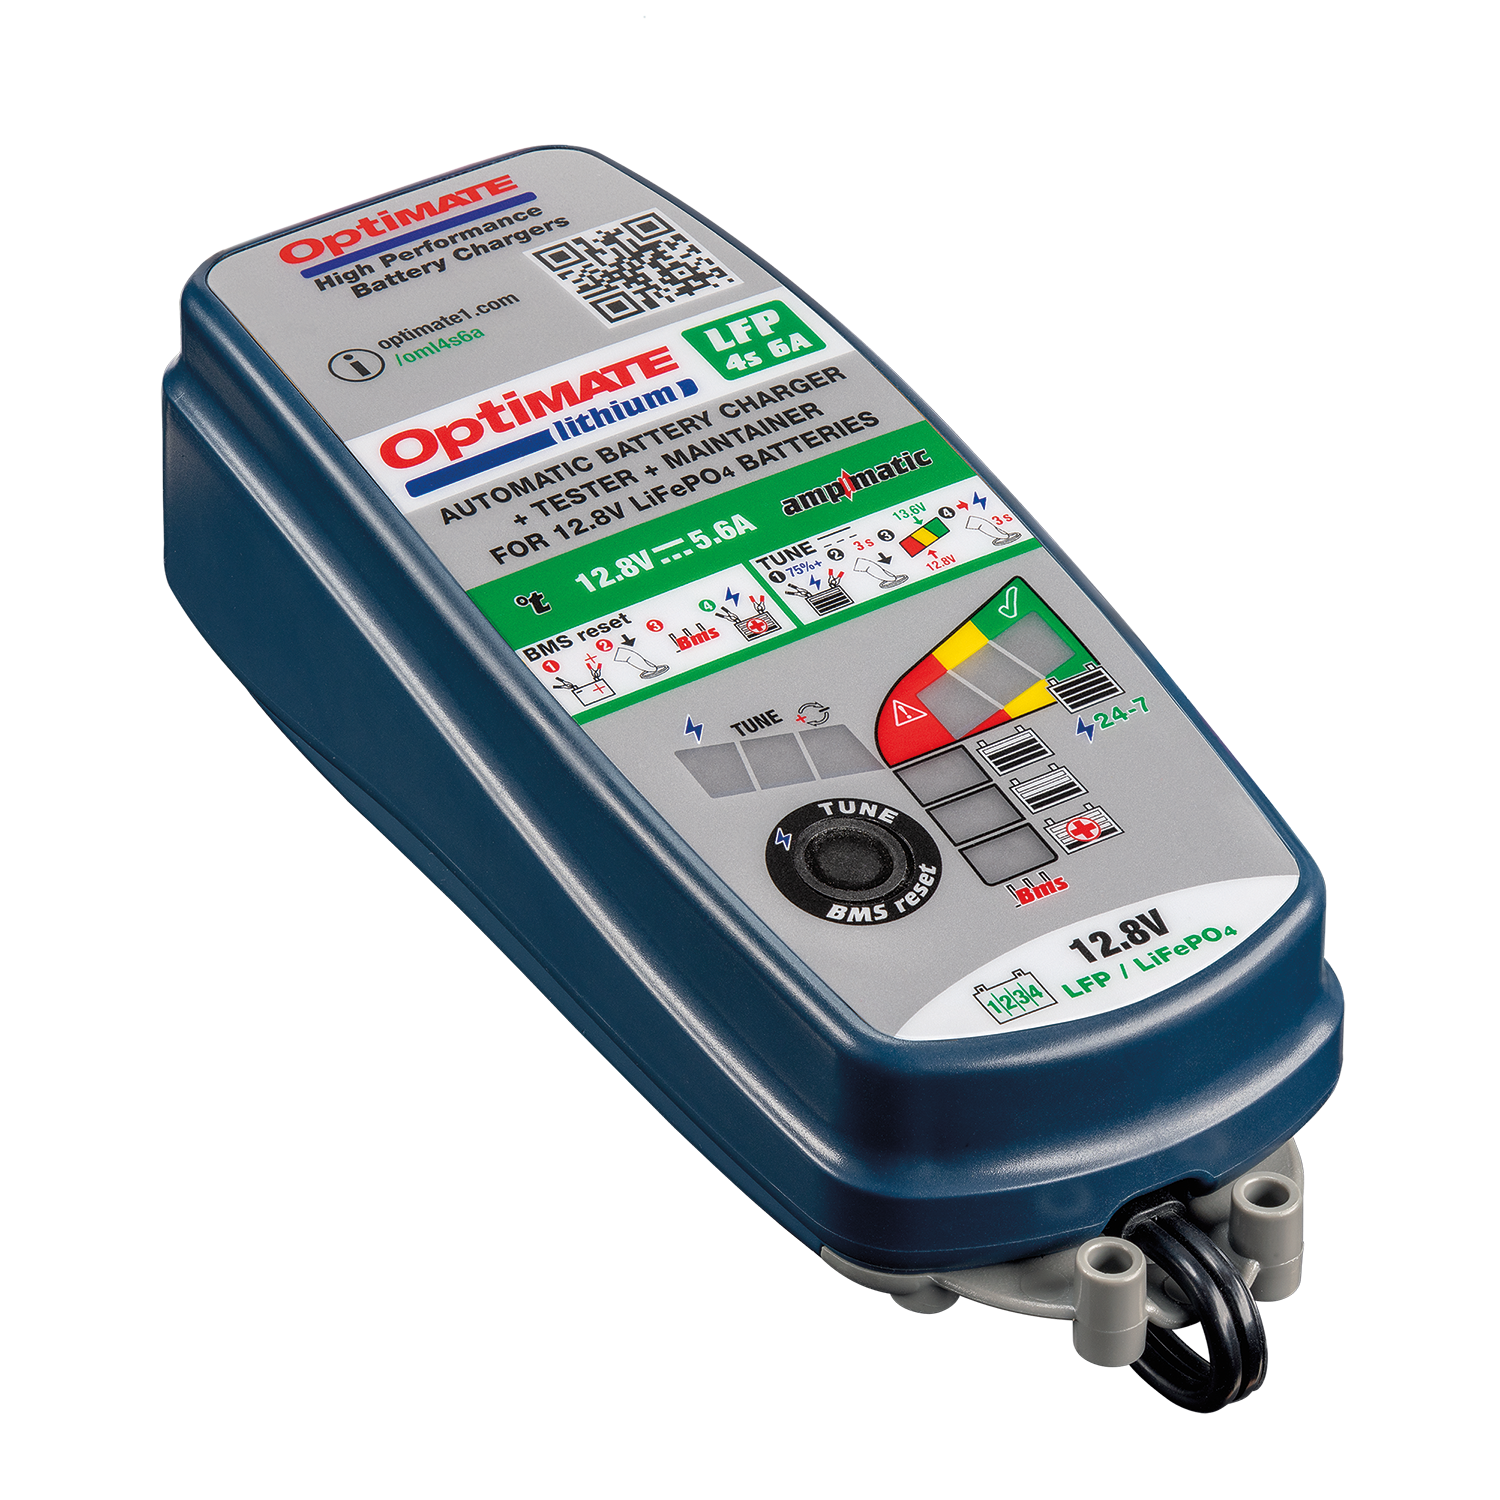 Optimate TM-391 6amp Battery Charger/Maintainer (12-13.2V Batteries)